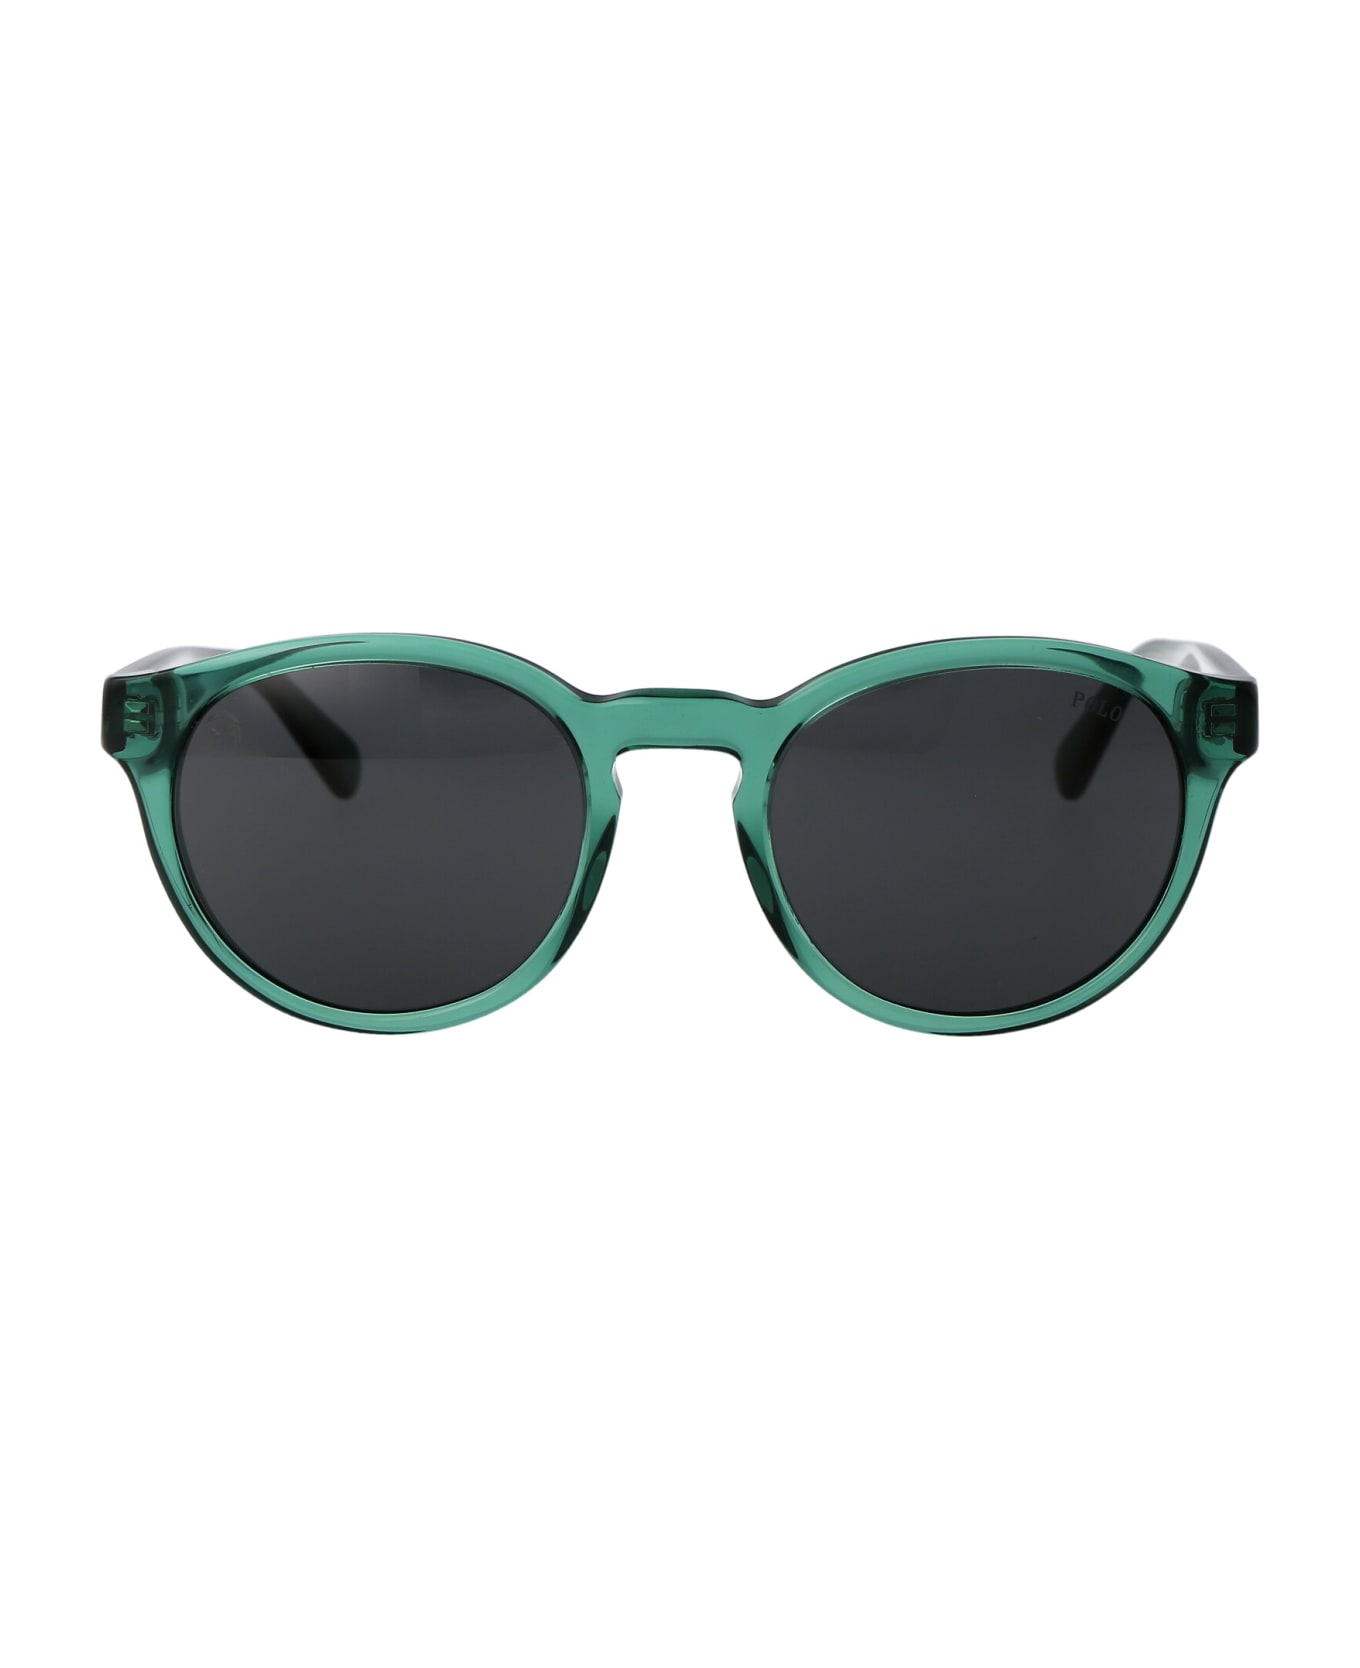 Polo Ralph Lauren 0ph4192 Sunglasses - 608487 Shiny Transparent Green